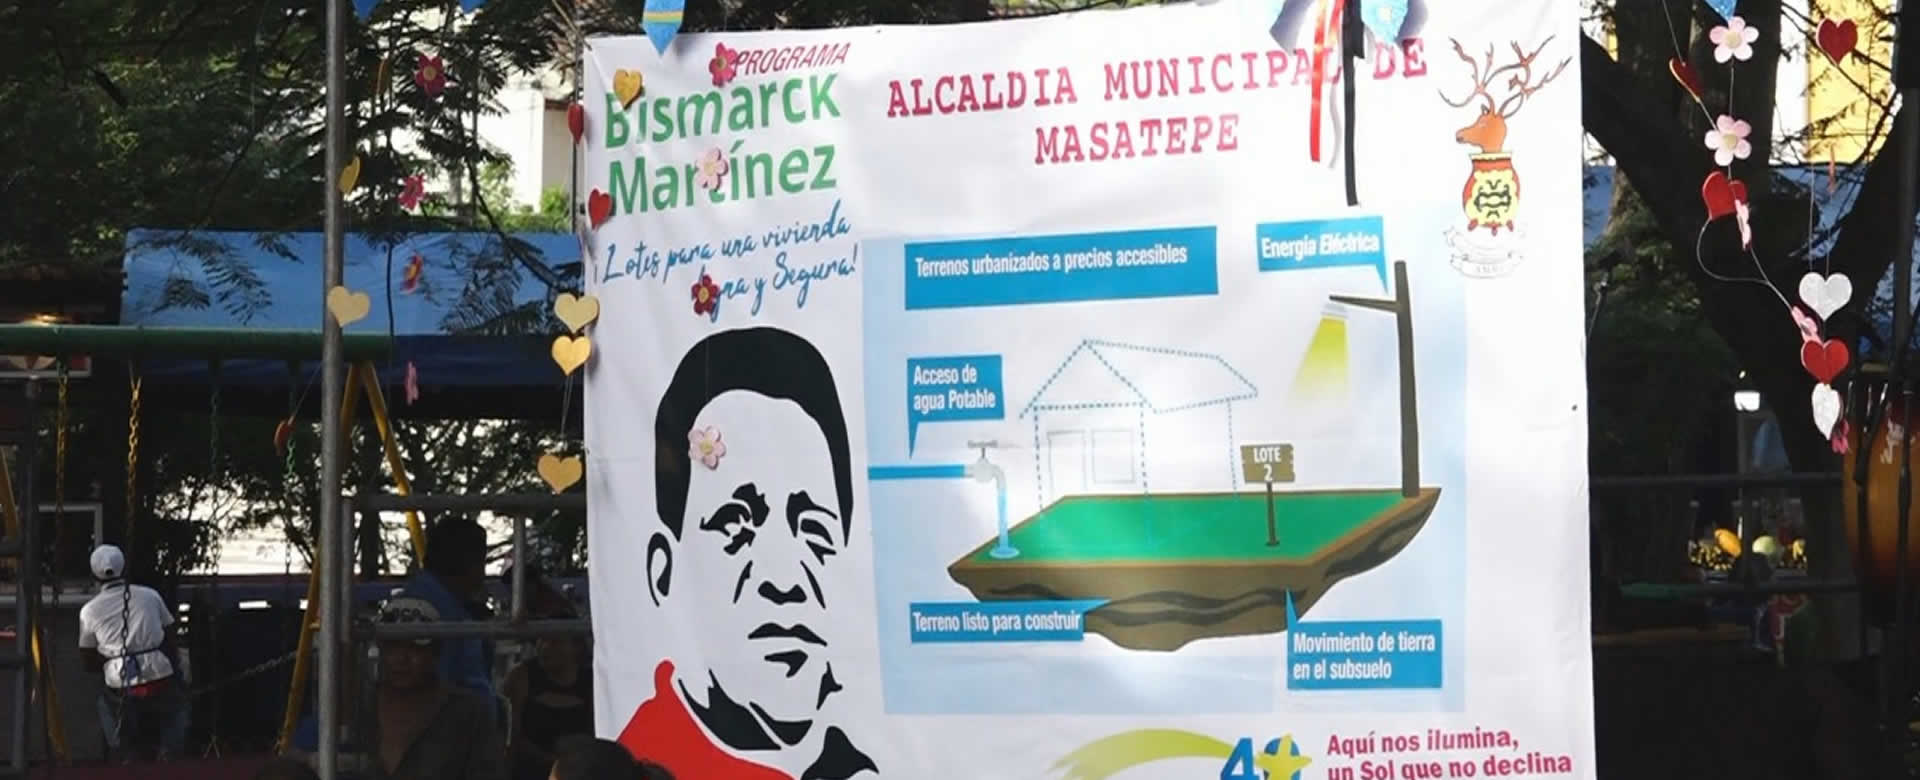 El Programa Bismarck Martínez llega a las familias de Masatepe